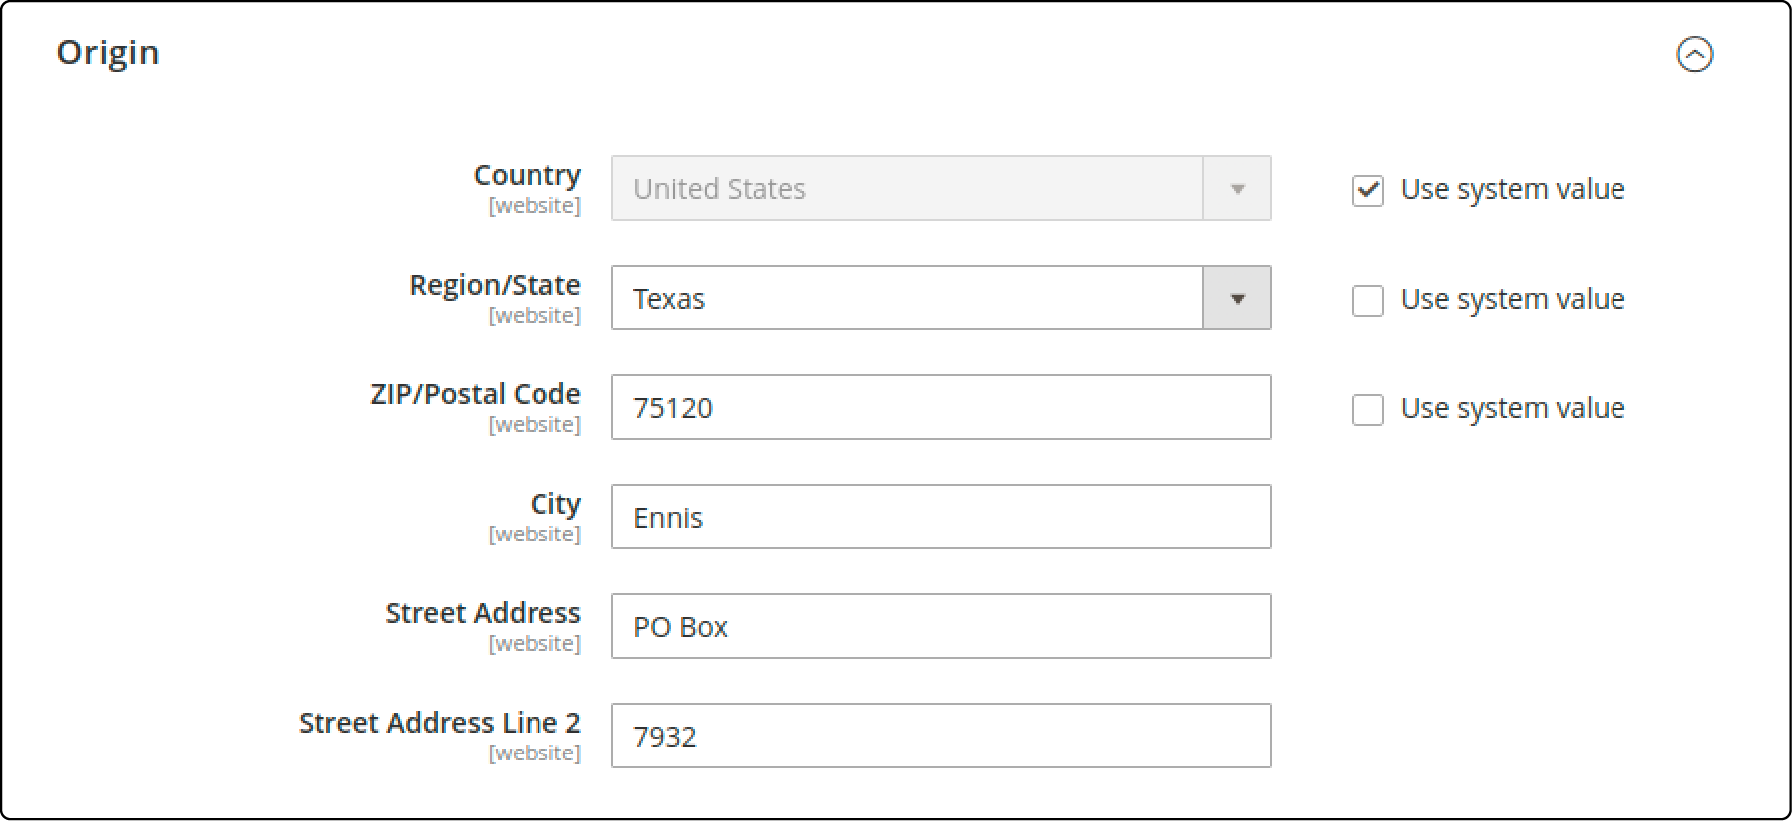 Origin Address for UPS Shipments